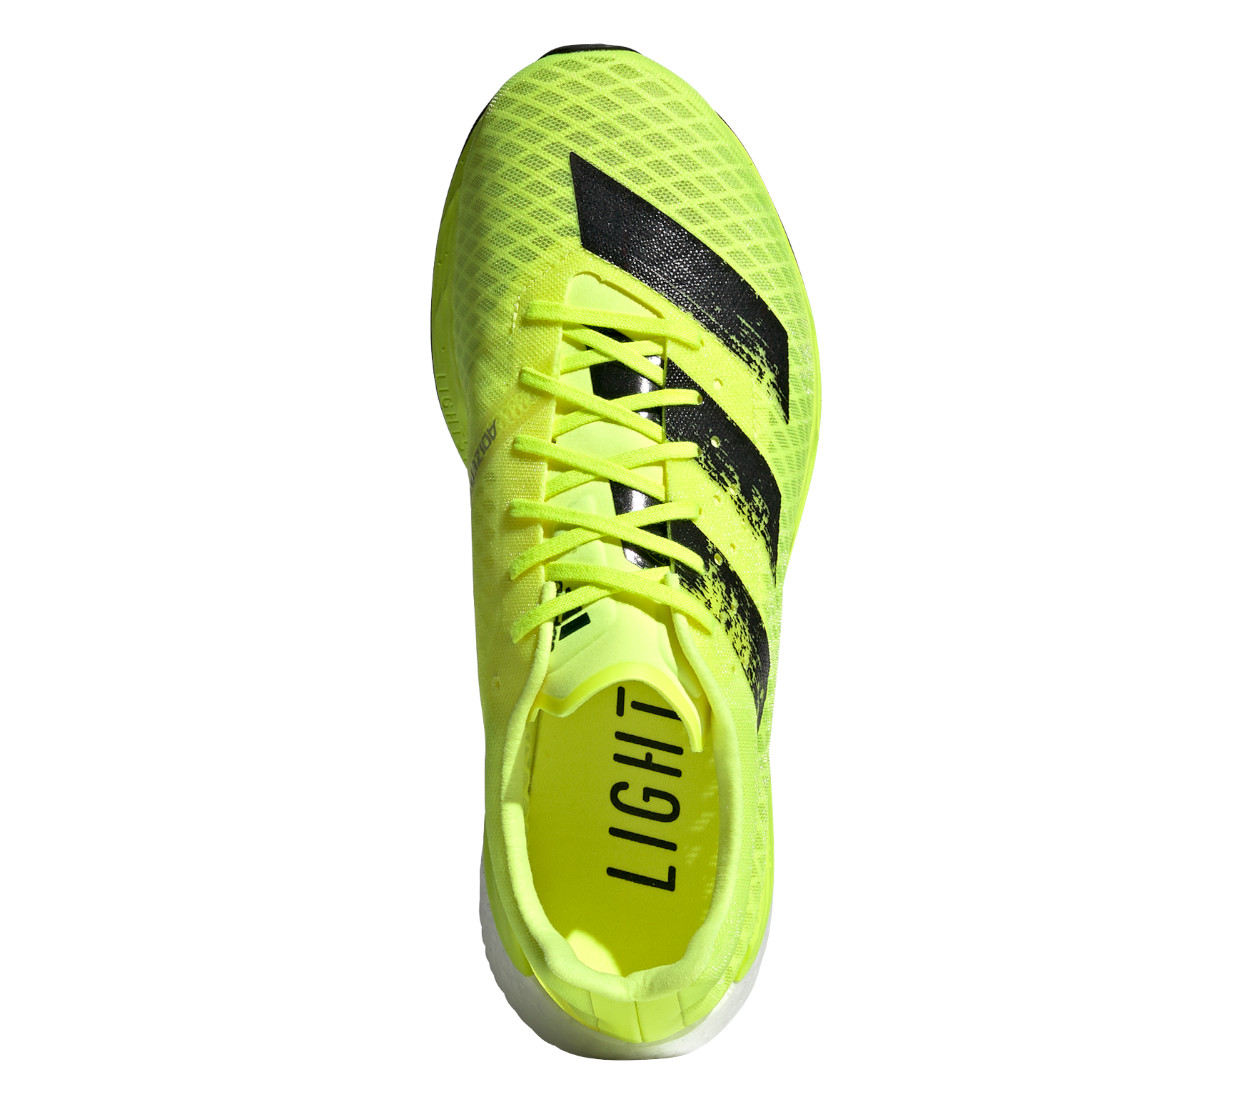 Adidas Adizero Pro (M) suola in fibra di carbonio | LBM Sport